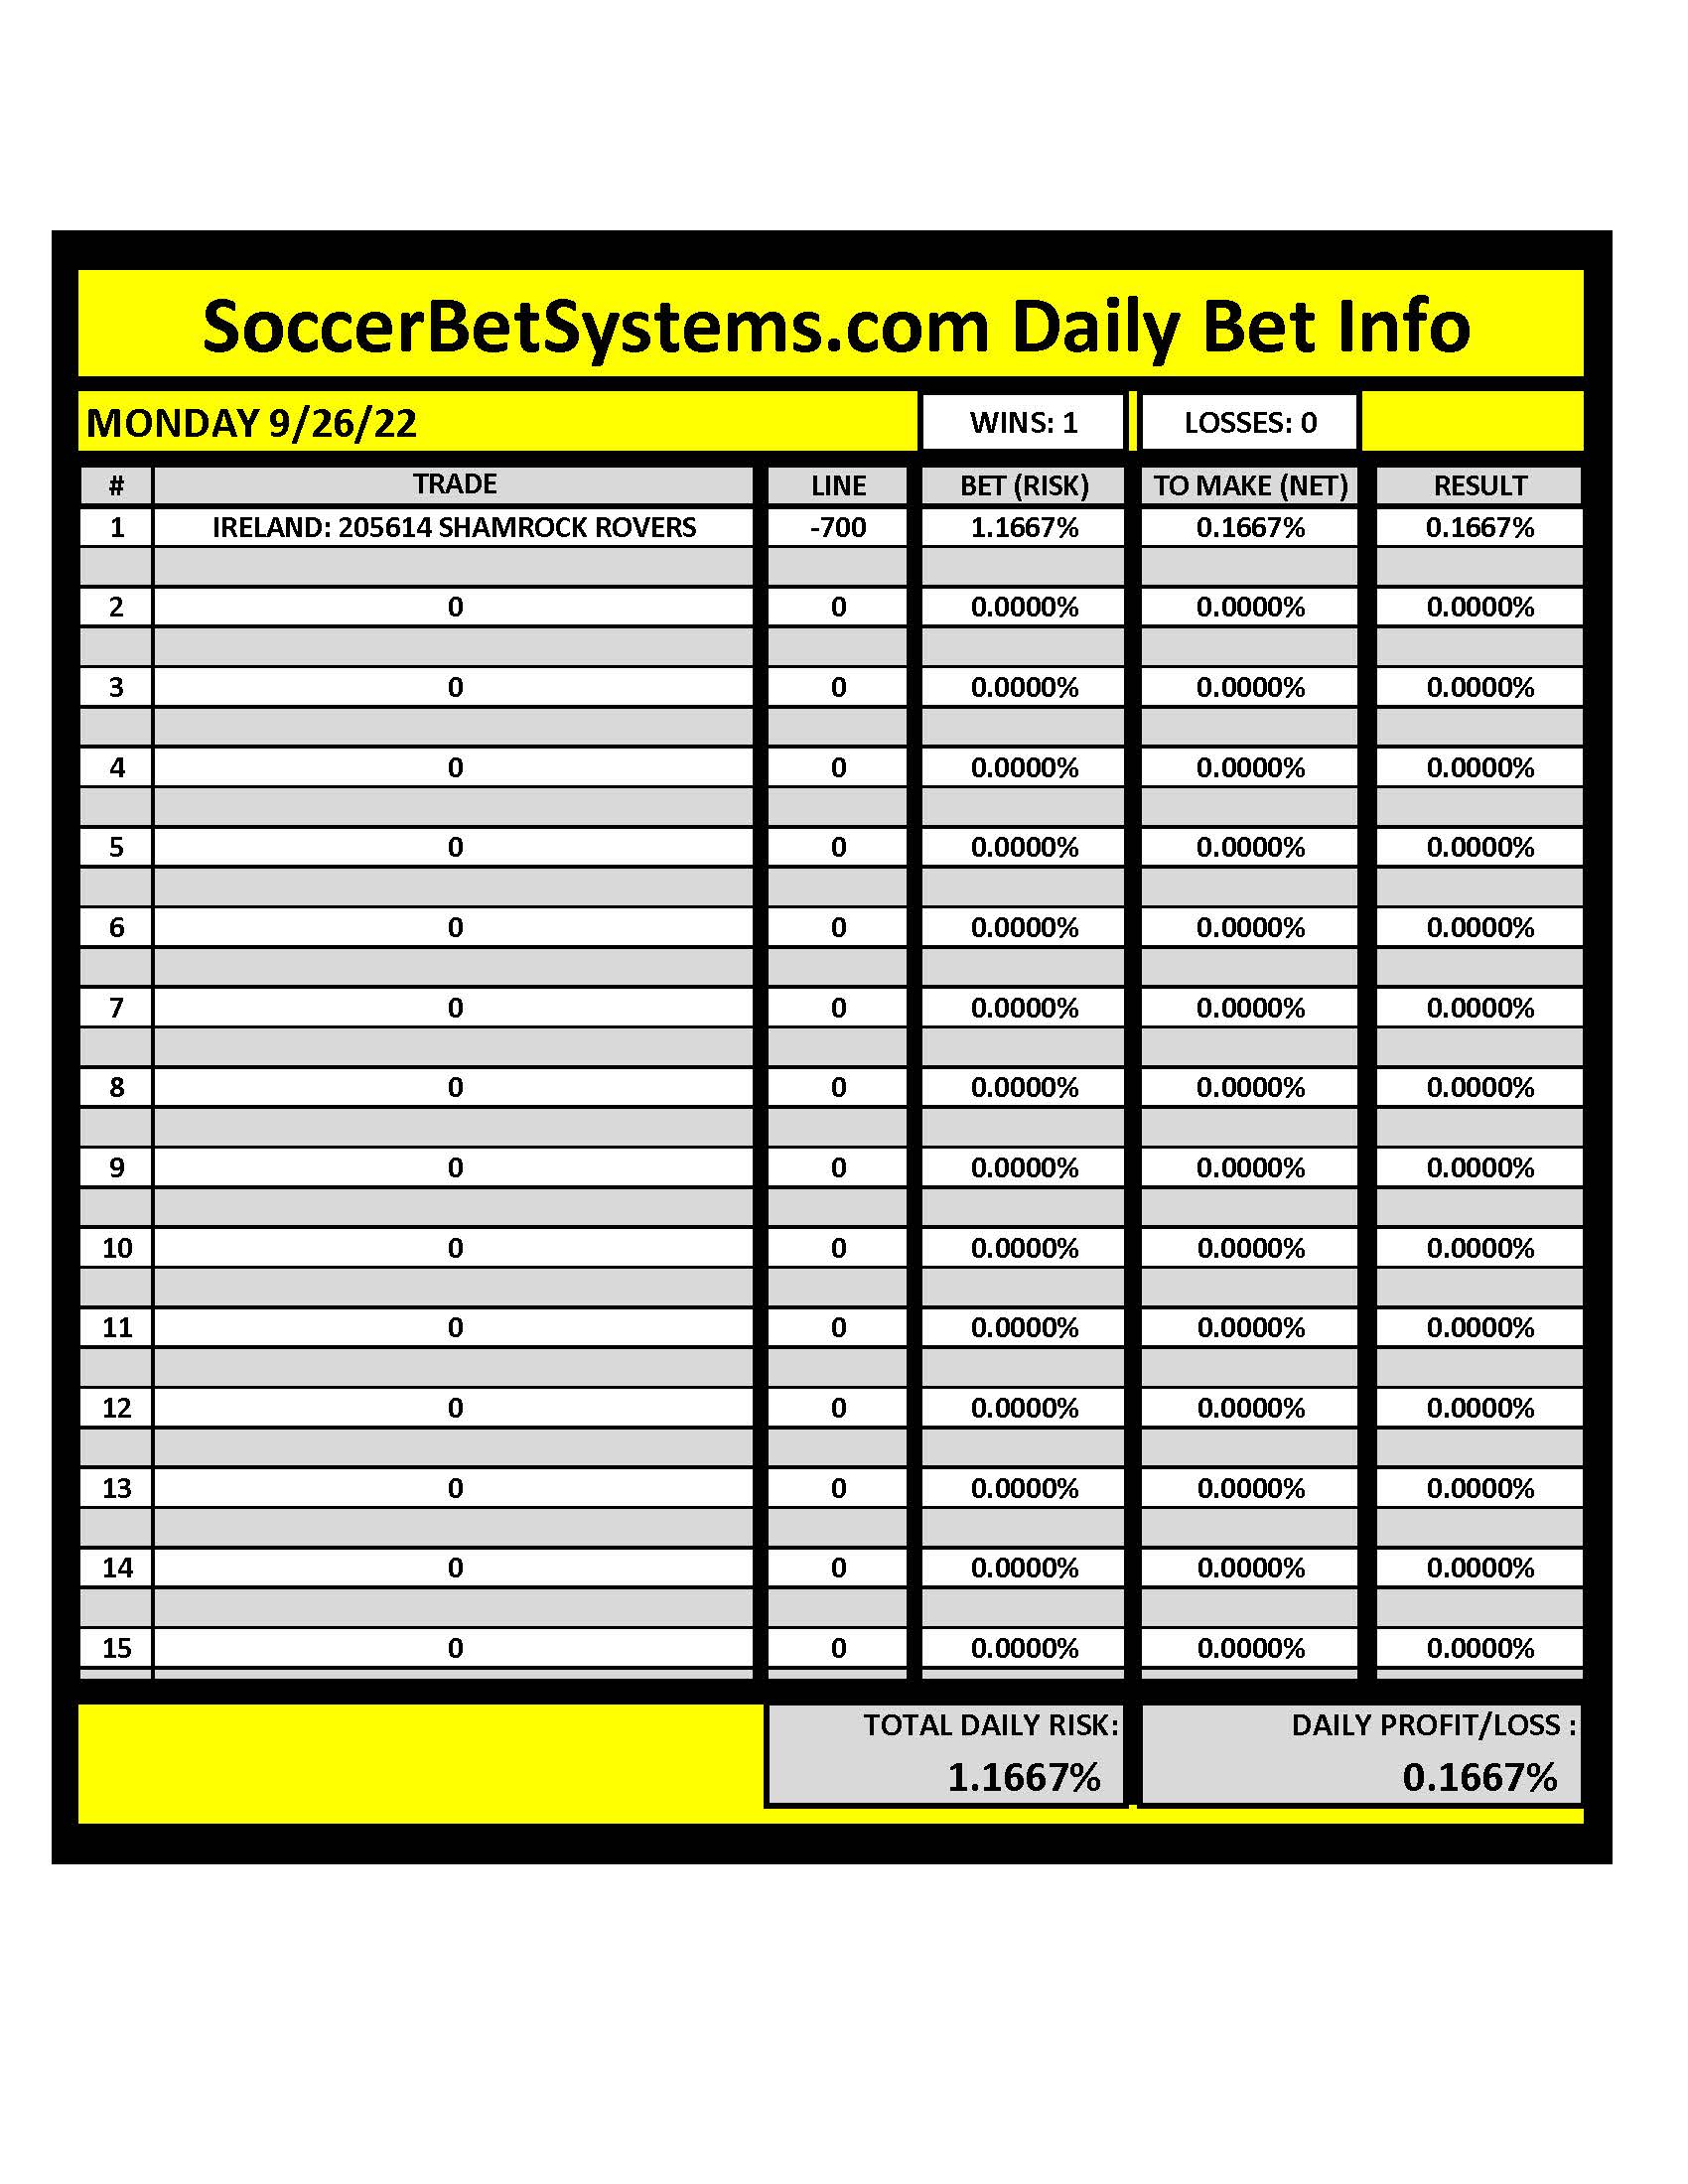 SoccerBetSystems.com 9/26/22 Daily Results